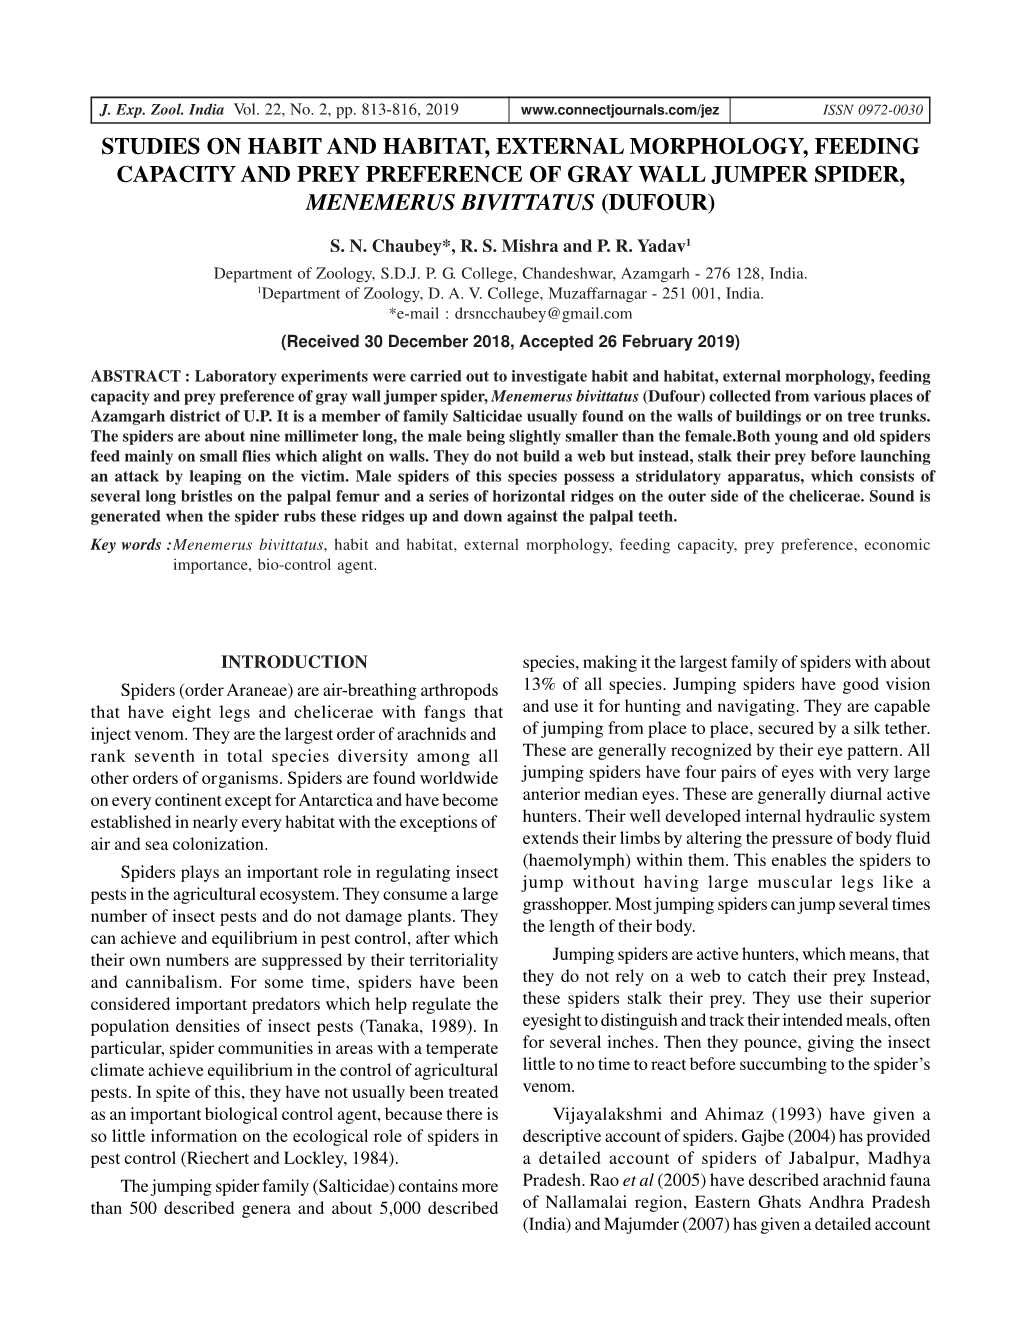 Studies on Habit and Habitat, External Morphology, Feeding Capacity and Prey Preference of Gray Wall Jumper Spider, Menemerus Bivittatus (Dufour)